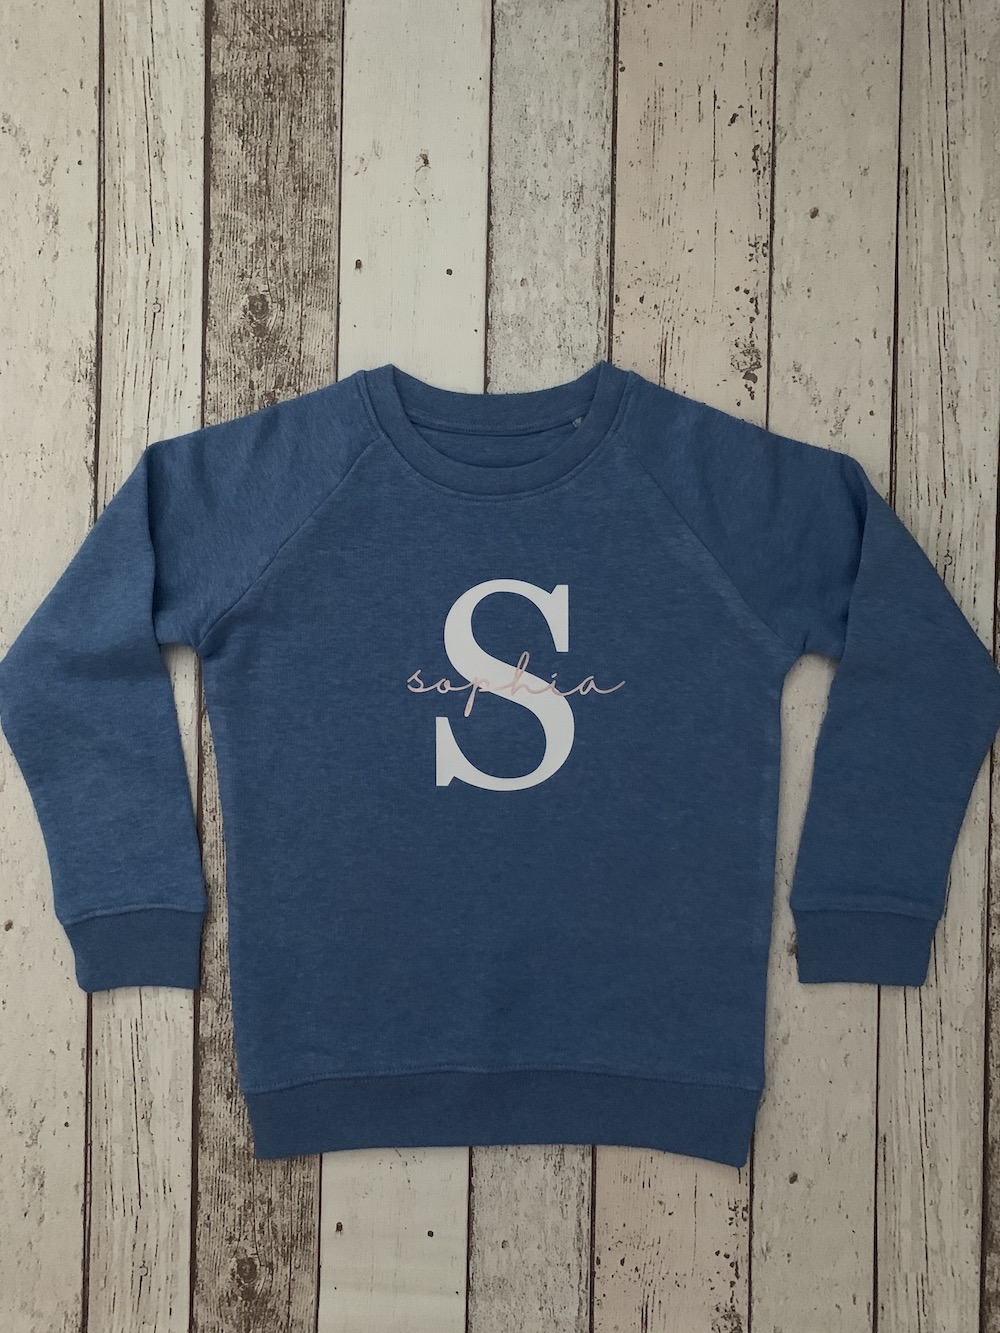 Pretty Initial Blue Sweatshirt – Children’s Size